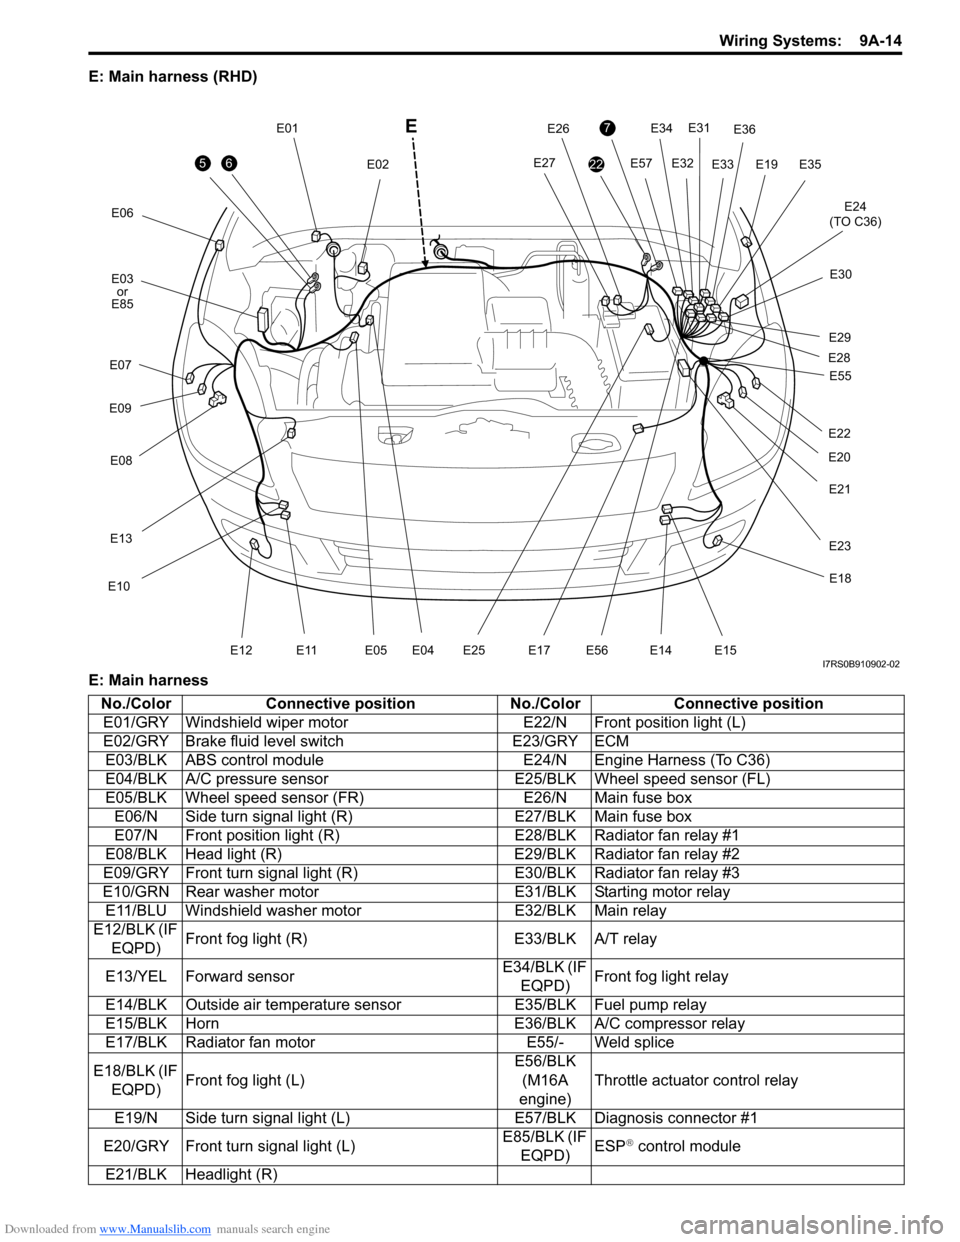 SUZUKI SWIFT 2008 2.G Service Workshop Manual Downloaded from www.Manualslib.com manuals search engine Wiring Systems:  9A-14
E: Main harness (RHD)
E: Main harness
56
E06E12
E03or
E85
E07
E09
E08
E13
E10
E11E05 E04
E01 E02
E19
7
22
E34E31
E32
E57